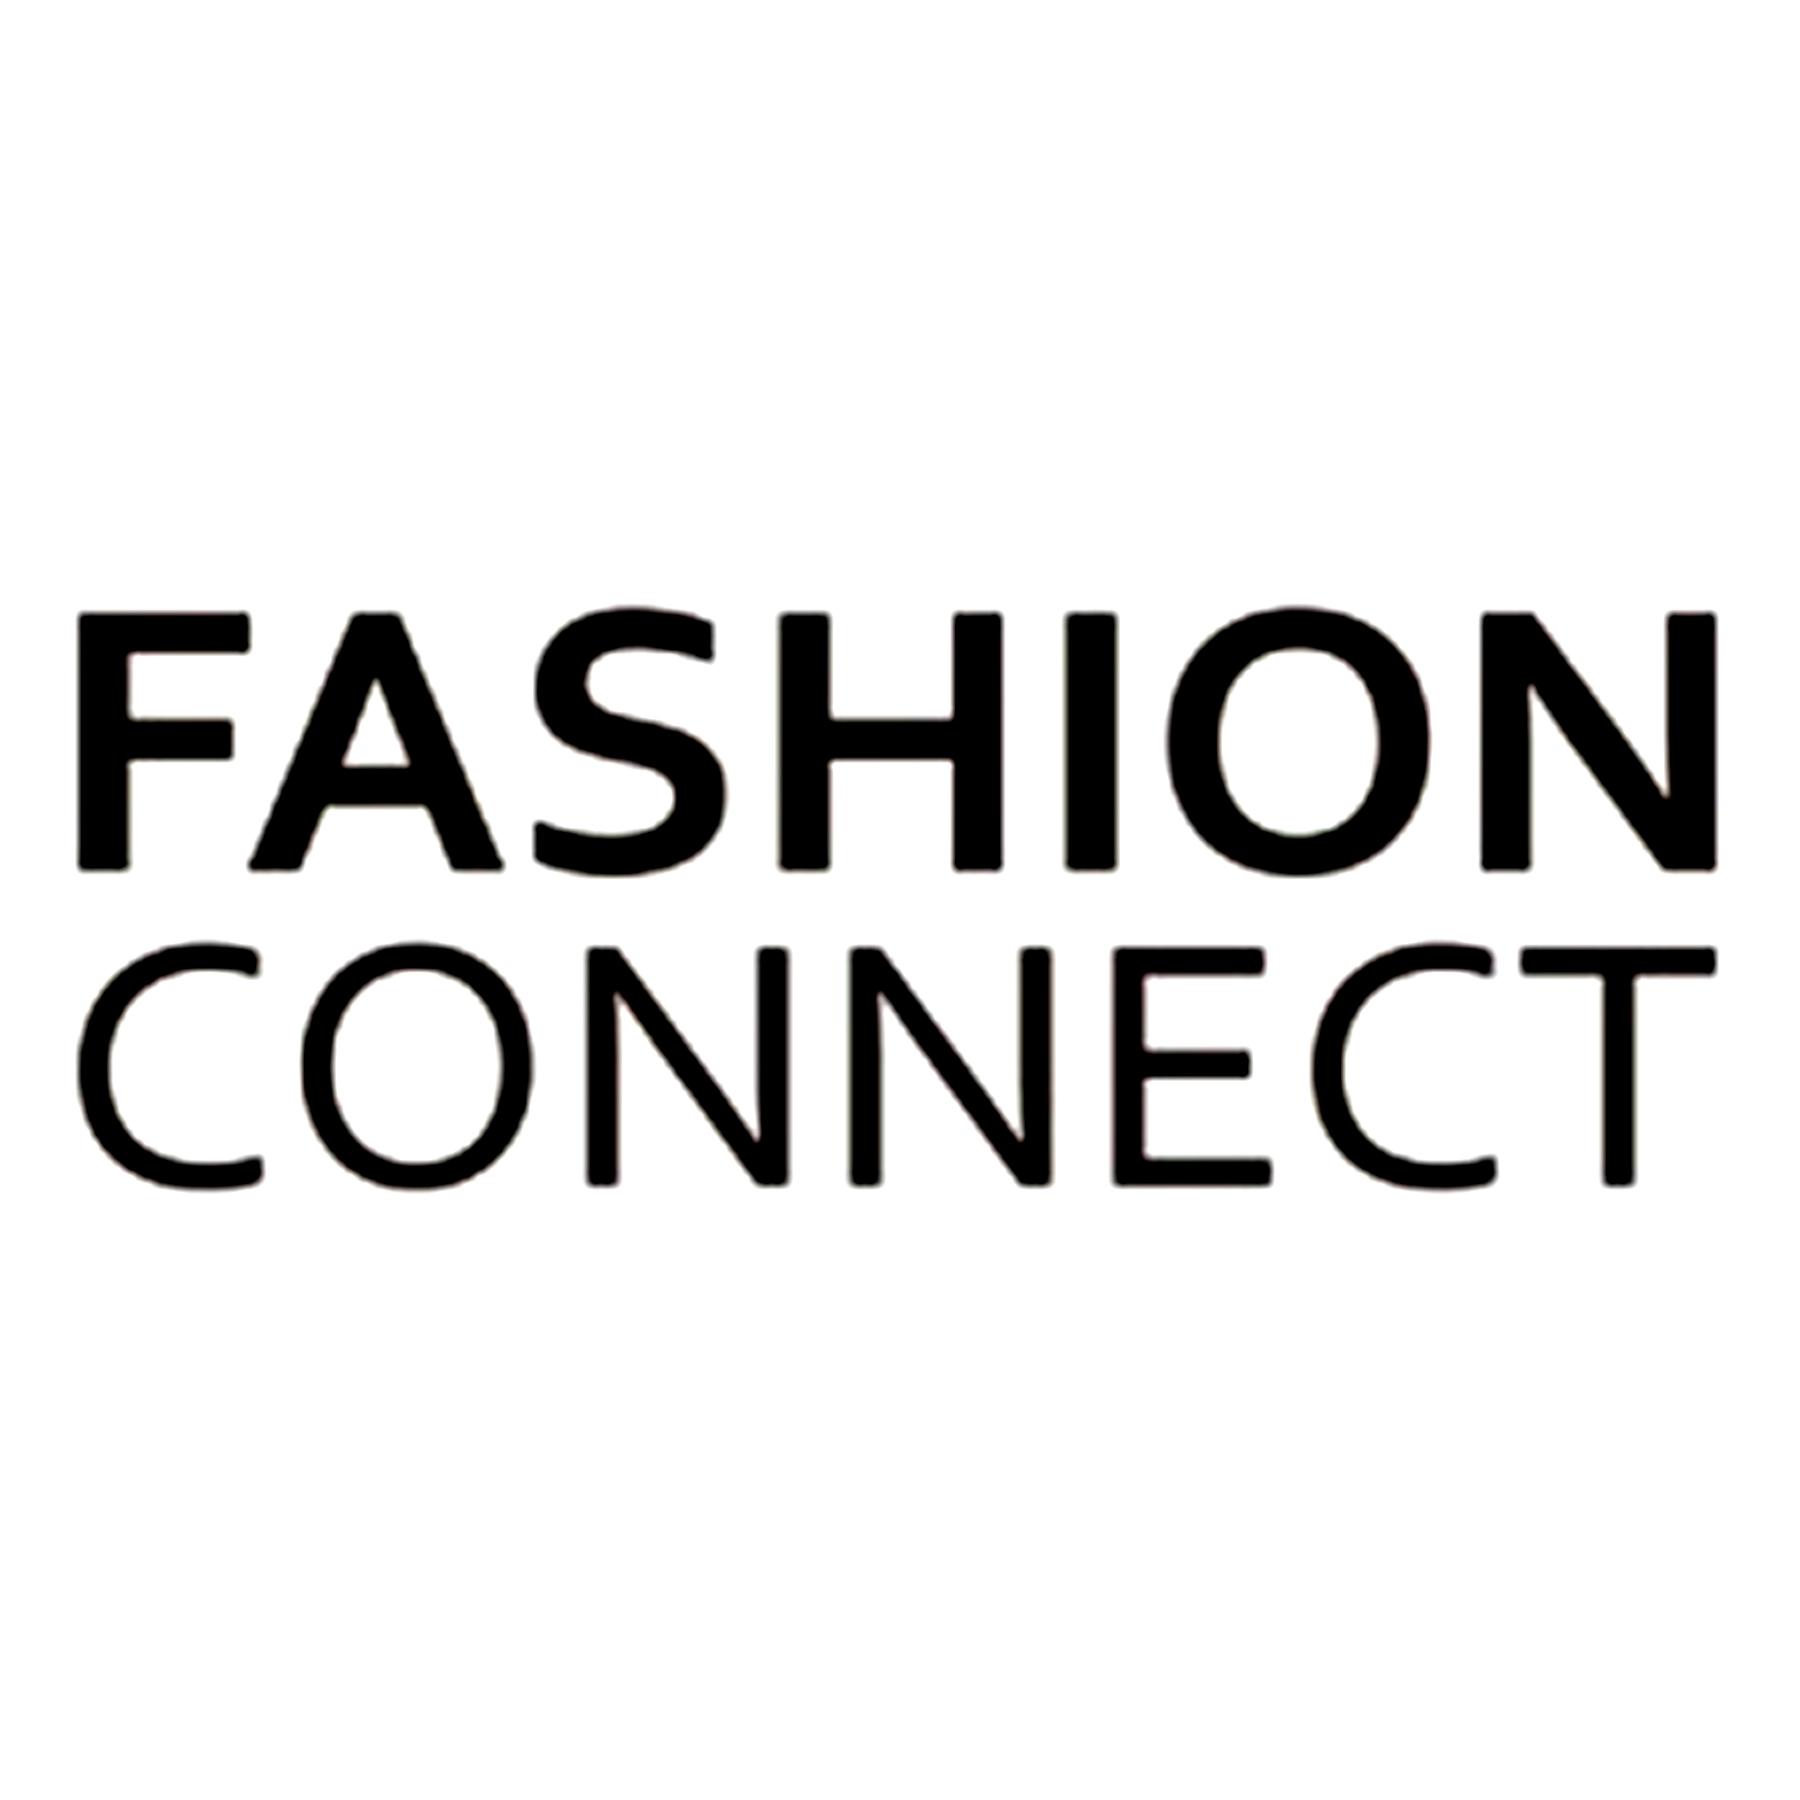 fashion connect商标公告